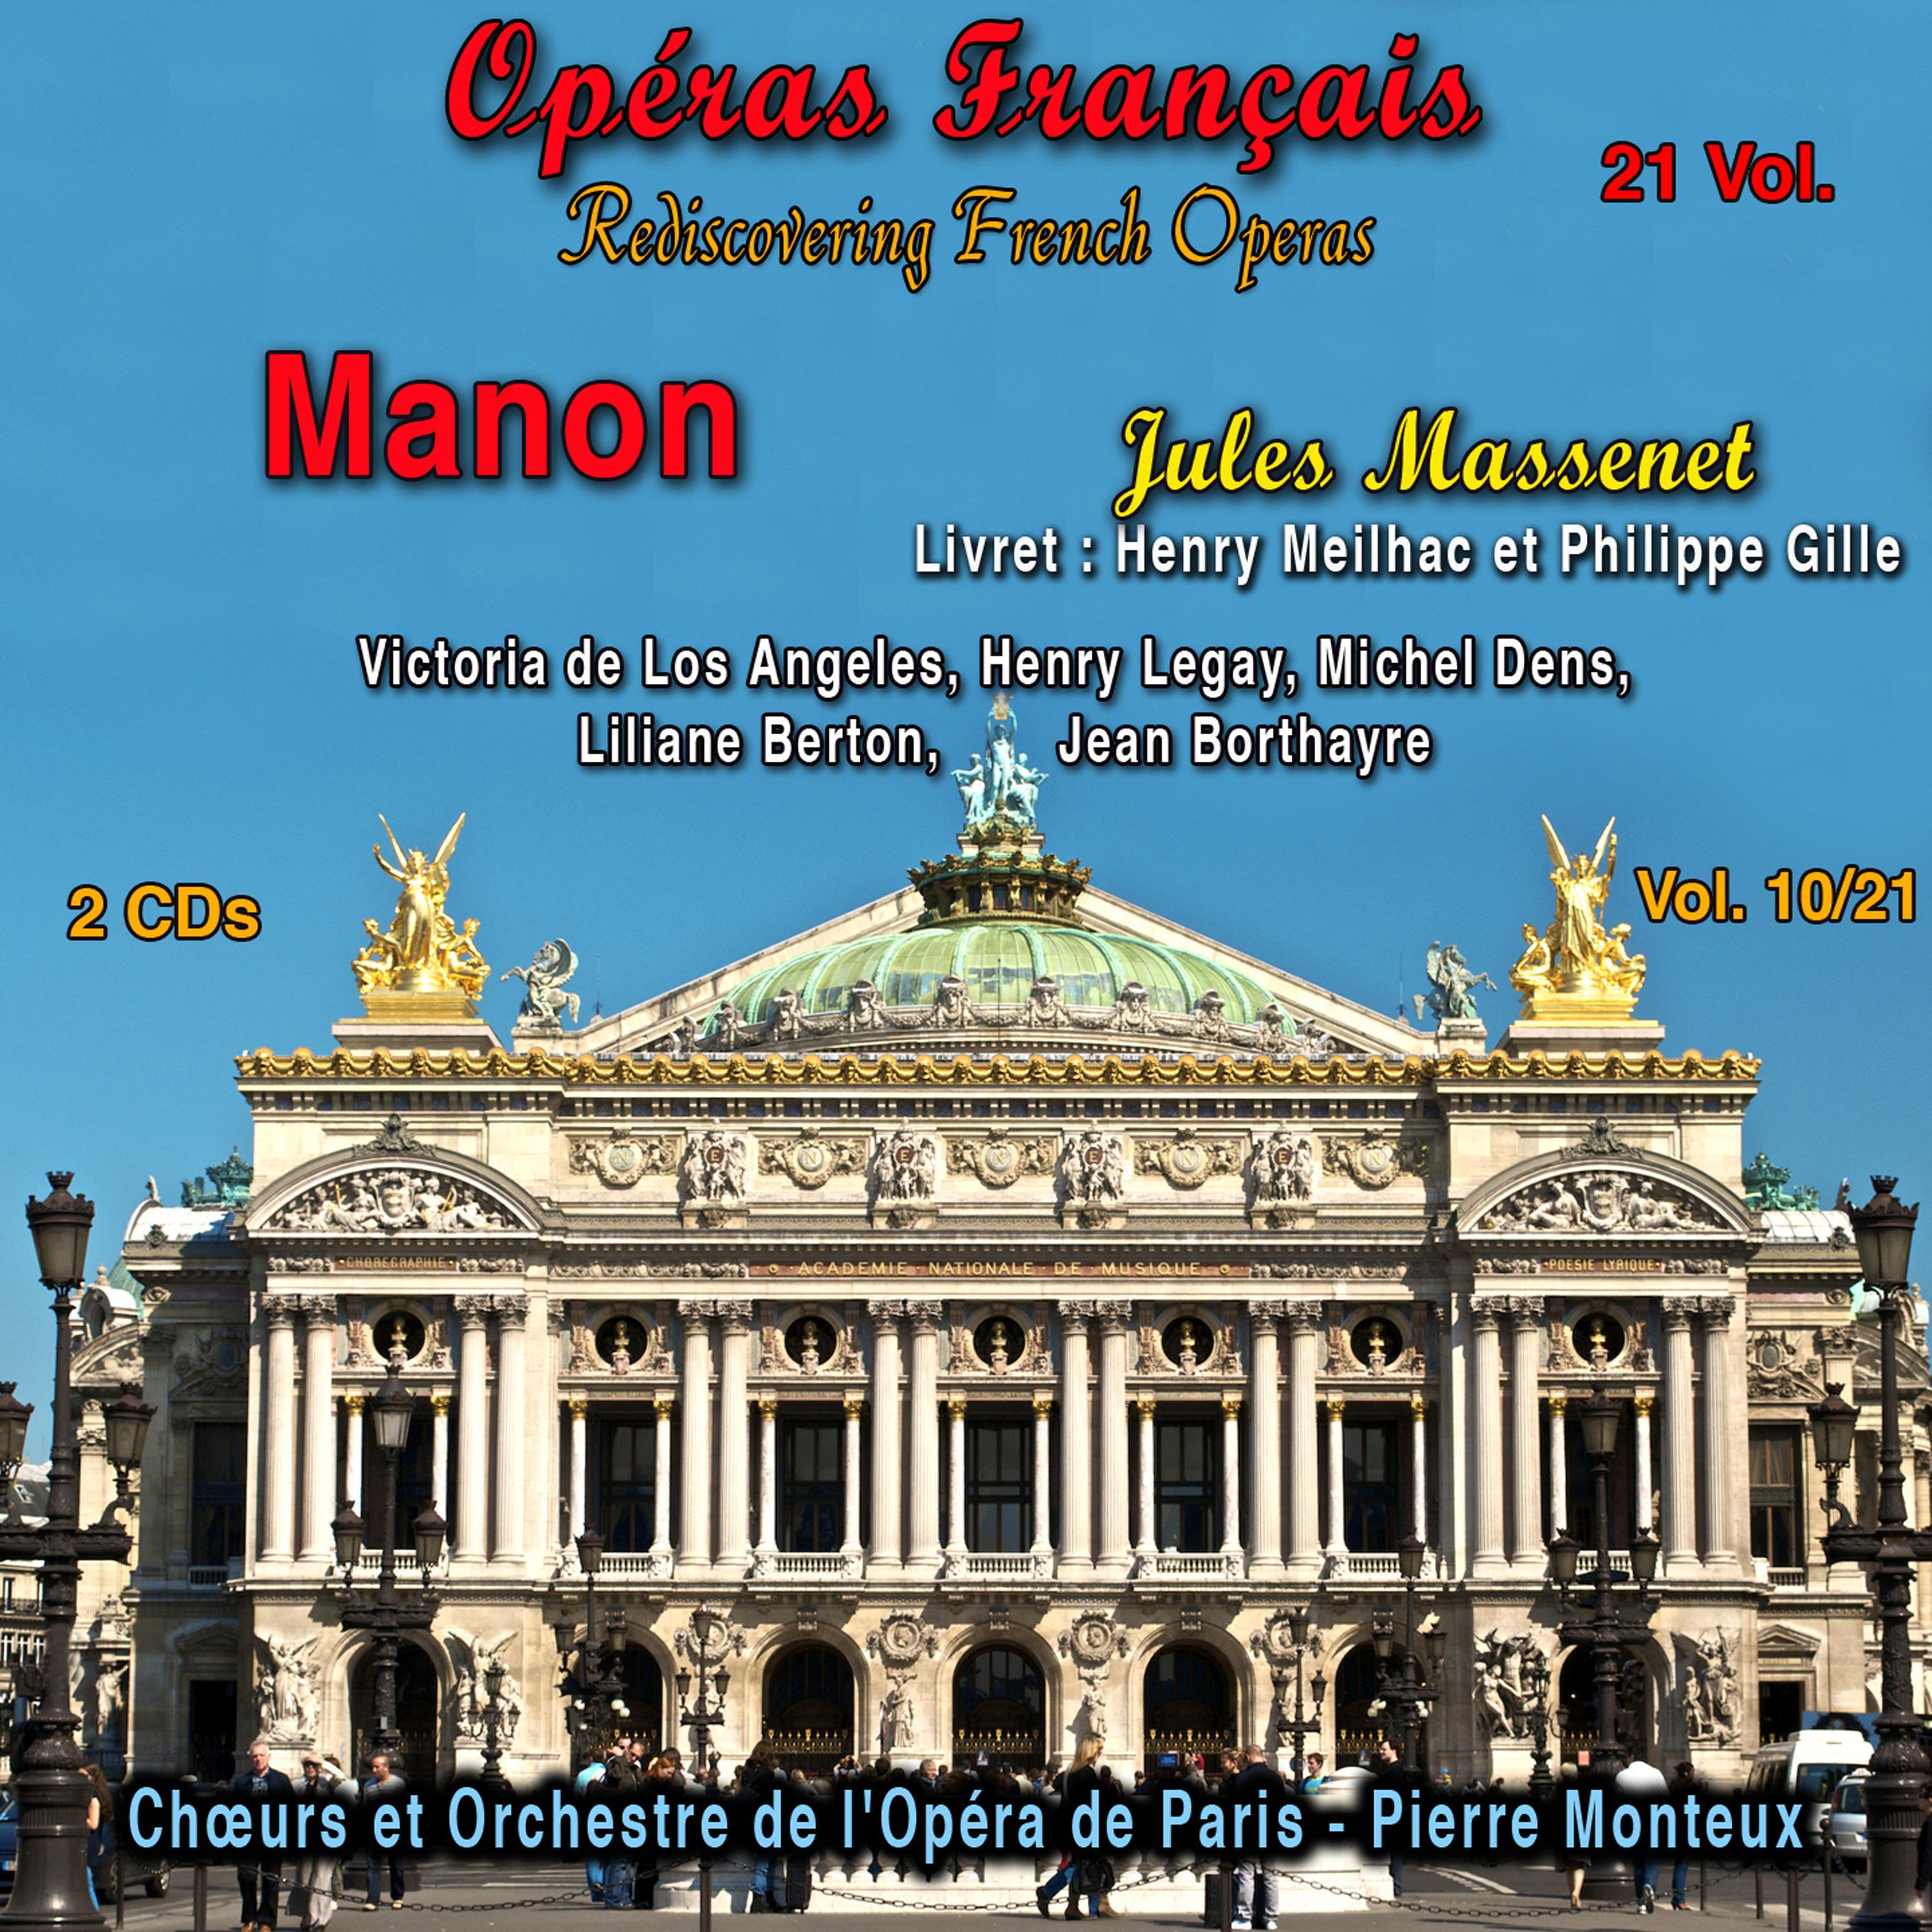 Jules Massenet - Manon, Acte V, Scène 1: Manon, pauvre Manon !